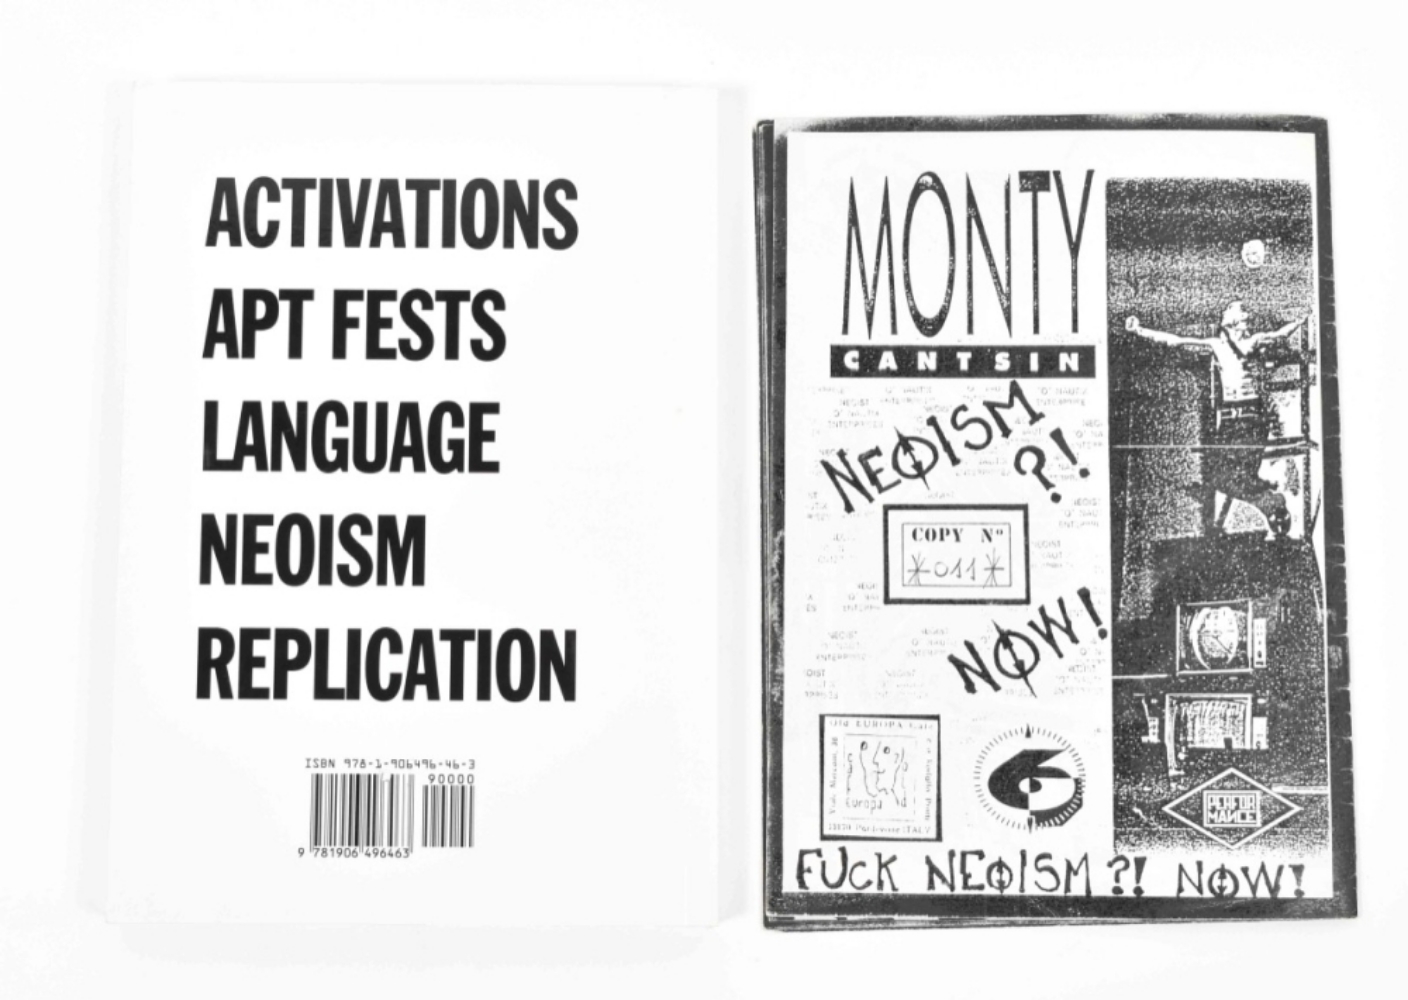 [Situationists] Monty Cantsin, Neoism - Image 5 of 10